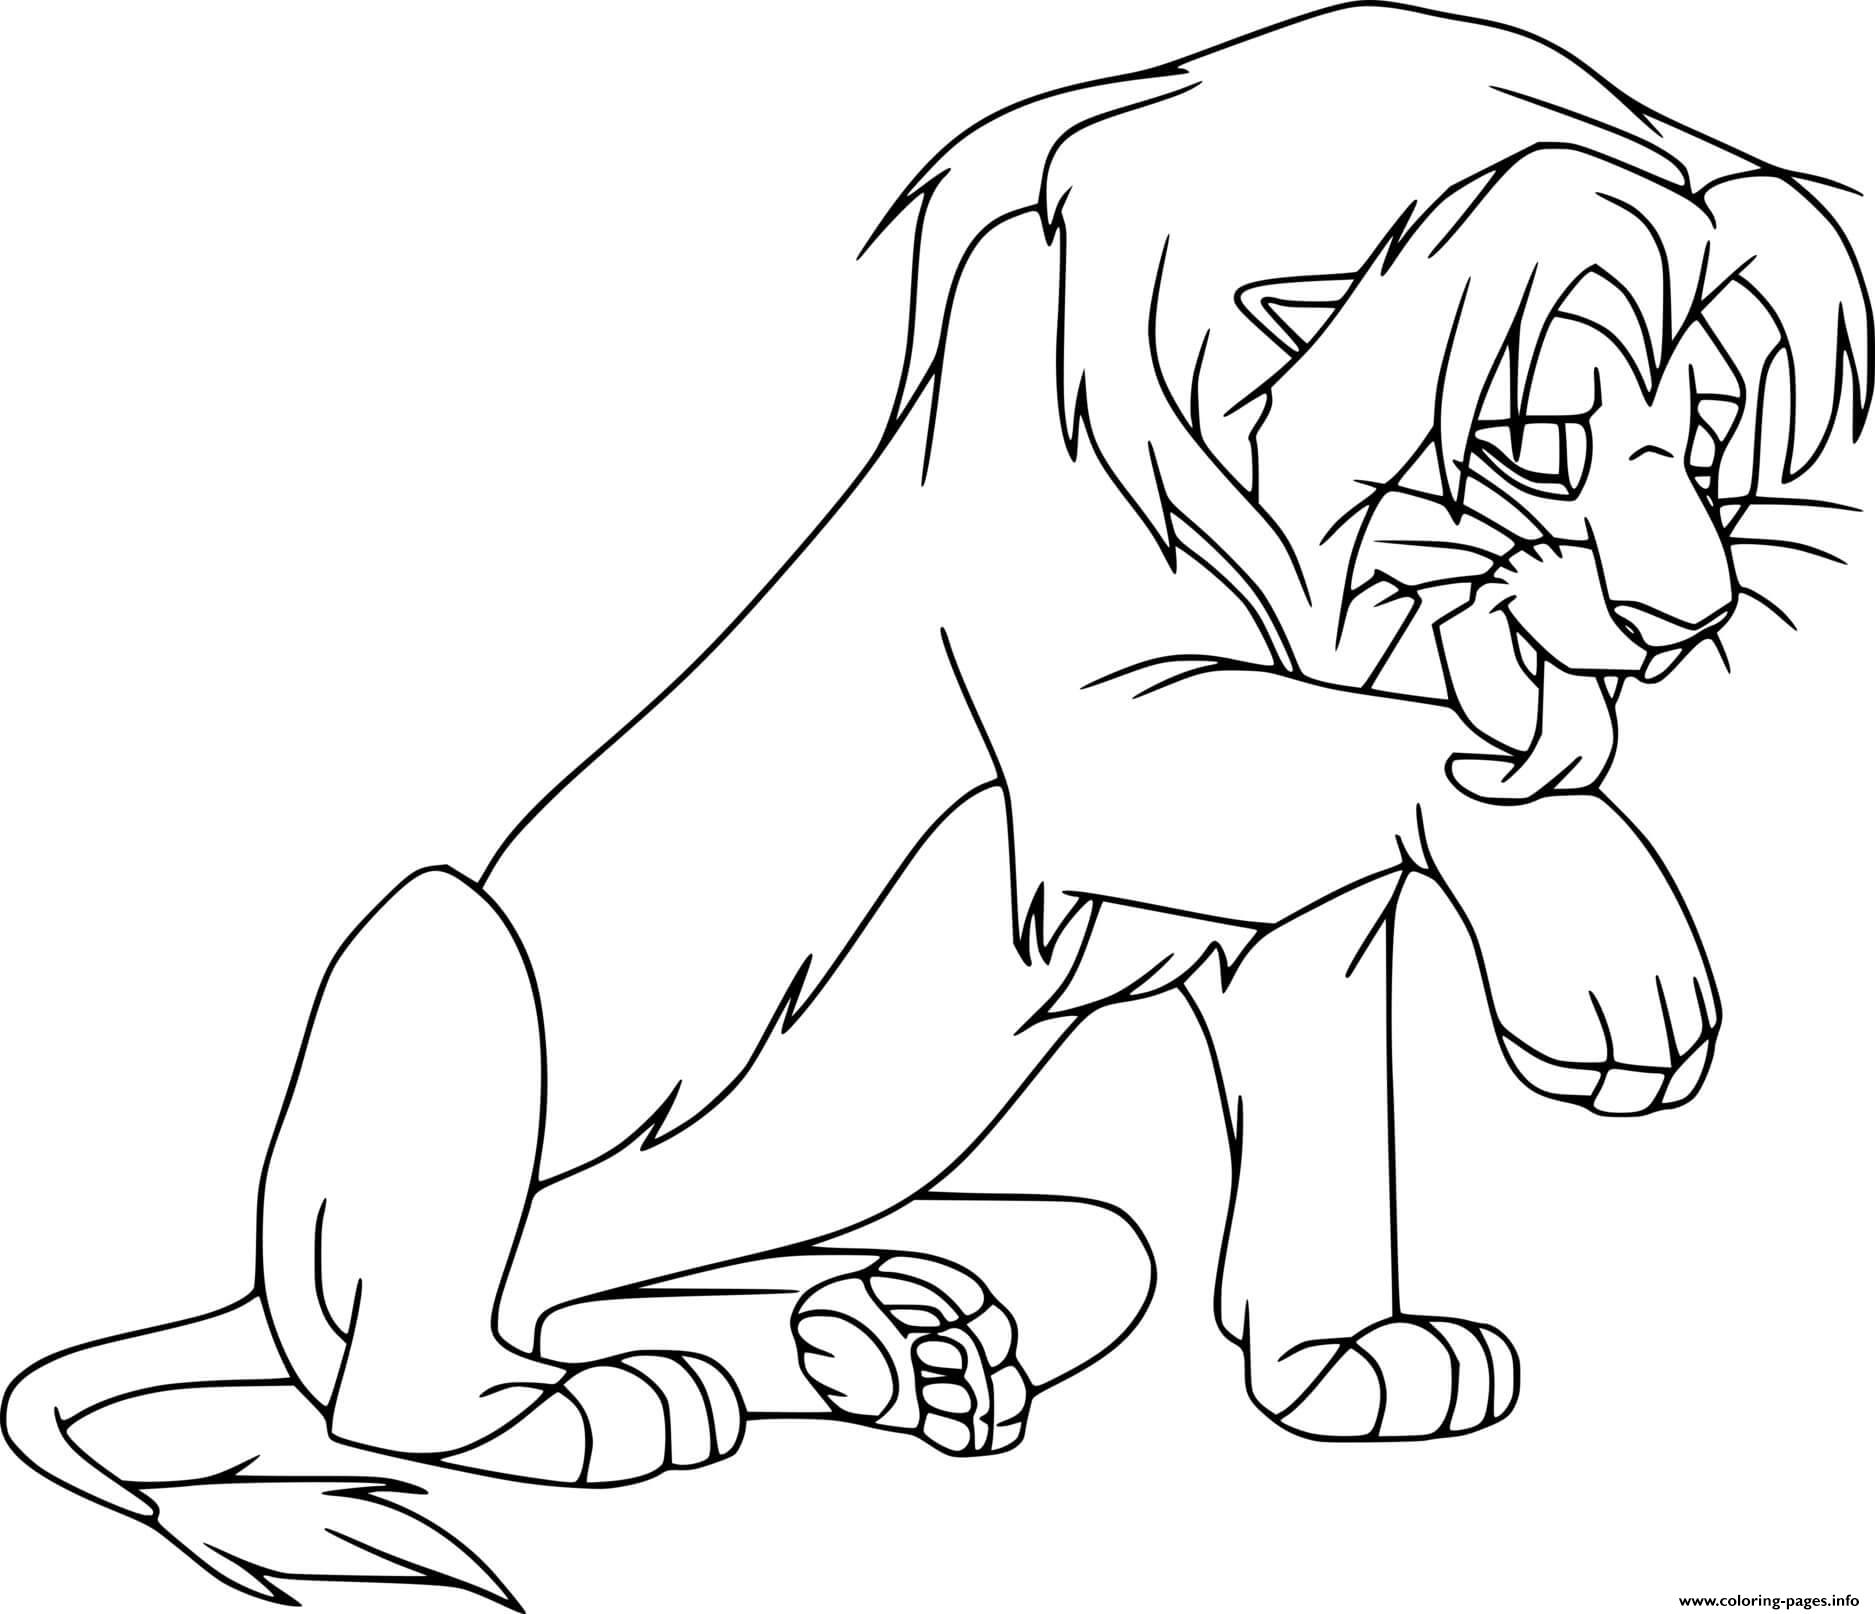 Simba Licking His Paw coloring